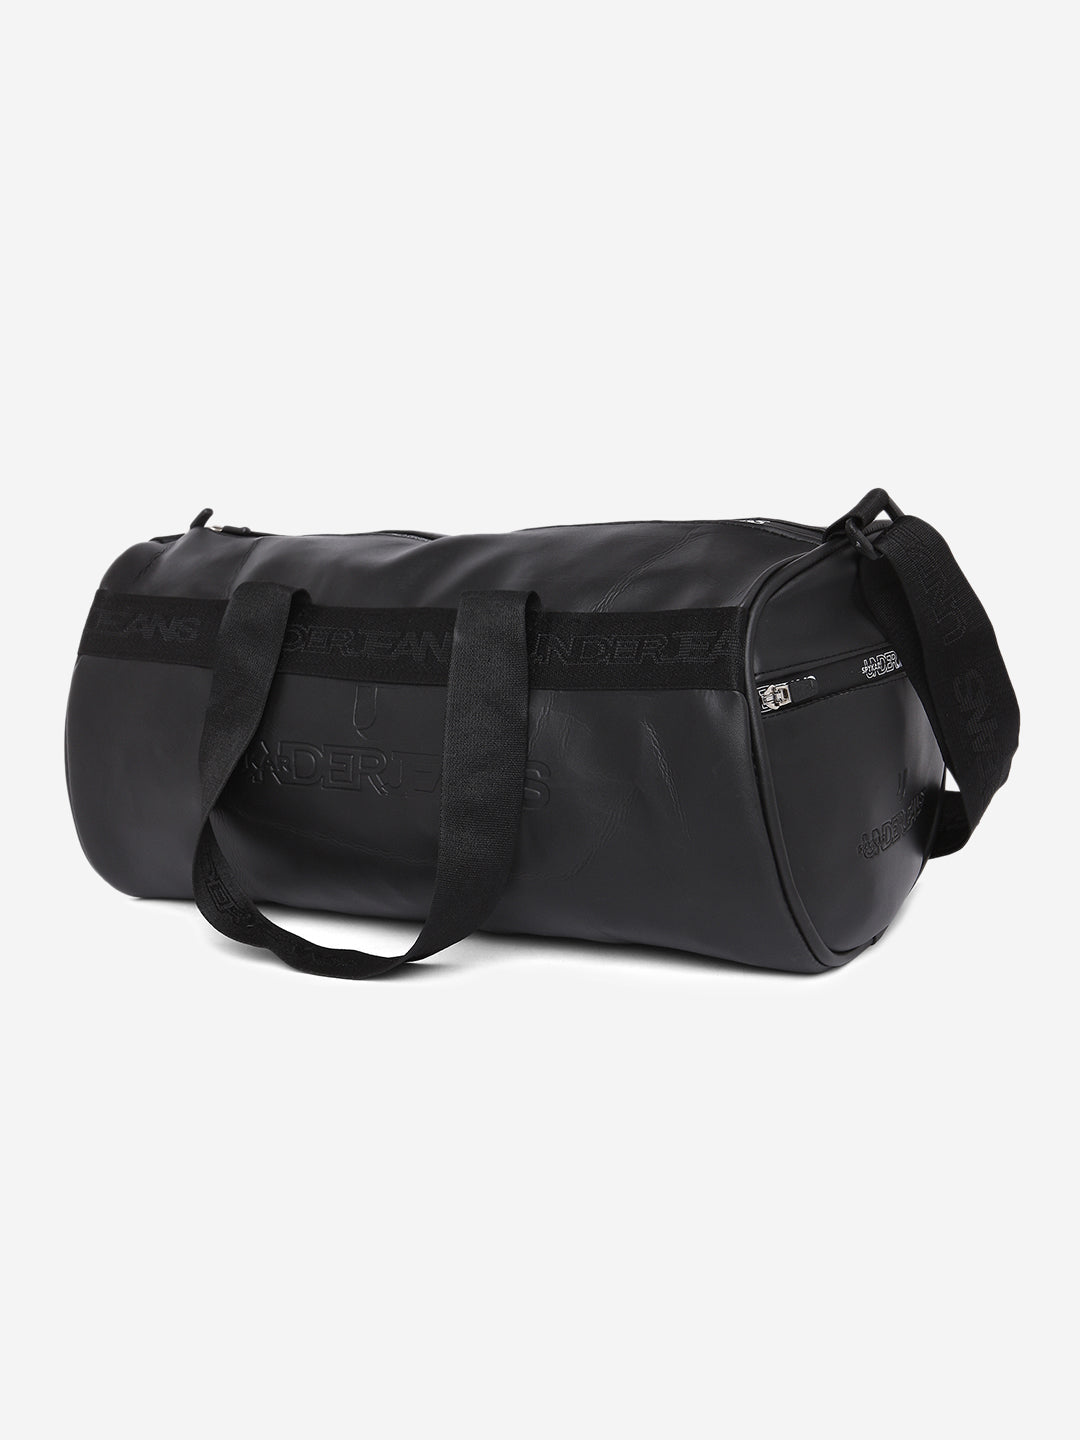 Competitor Duffle Bag – Xara Soccer